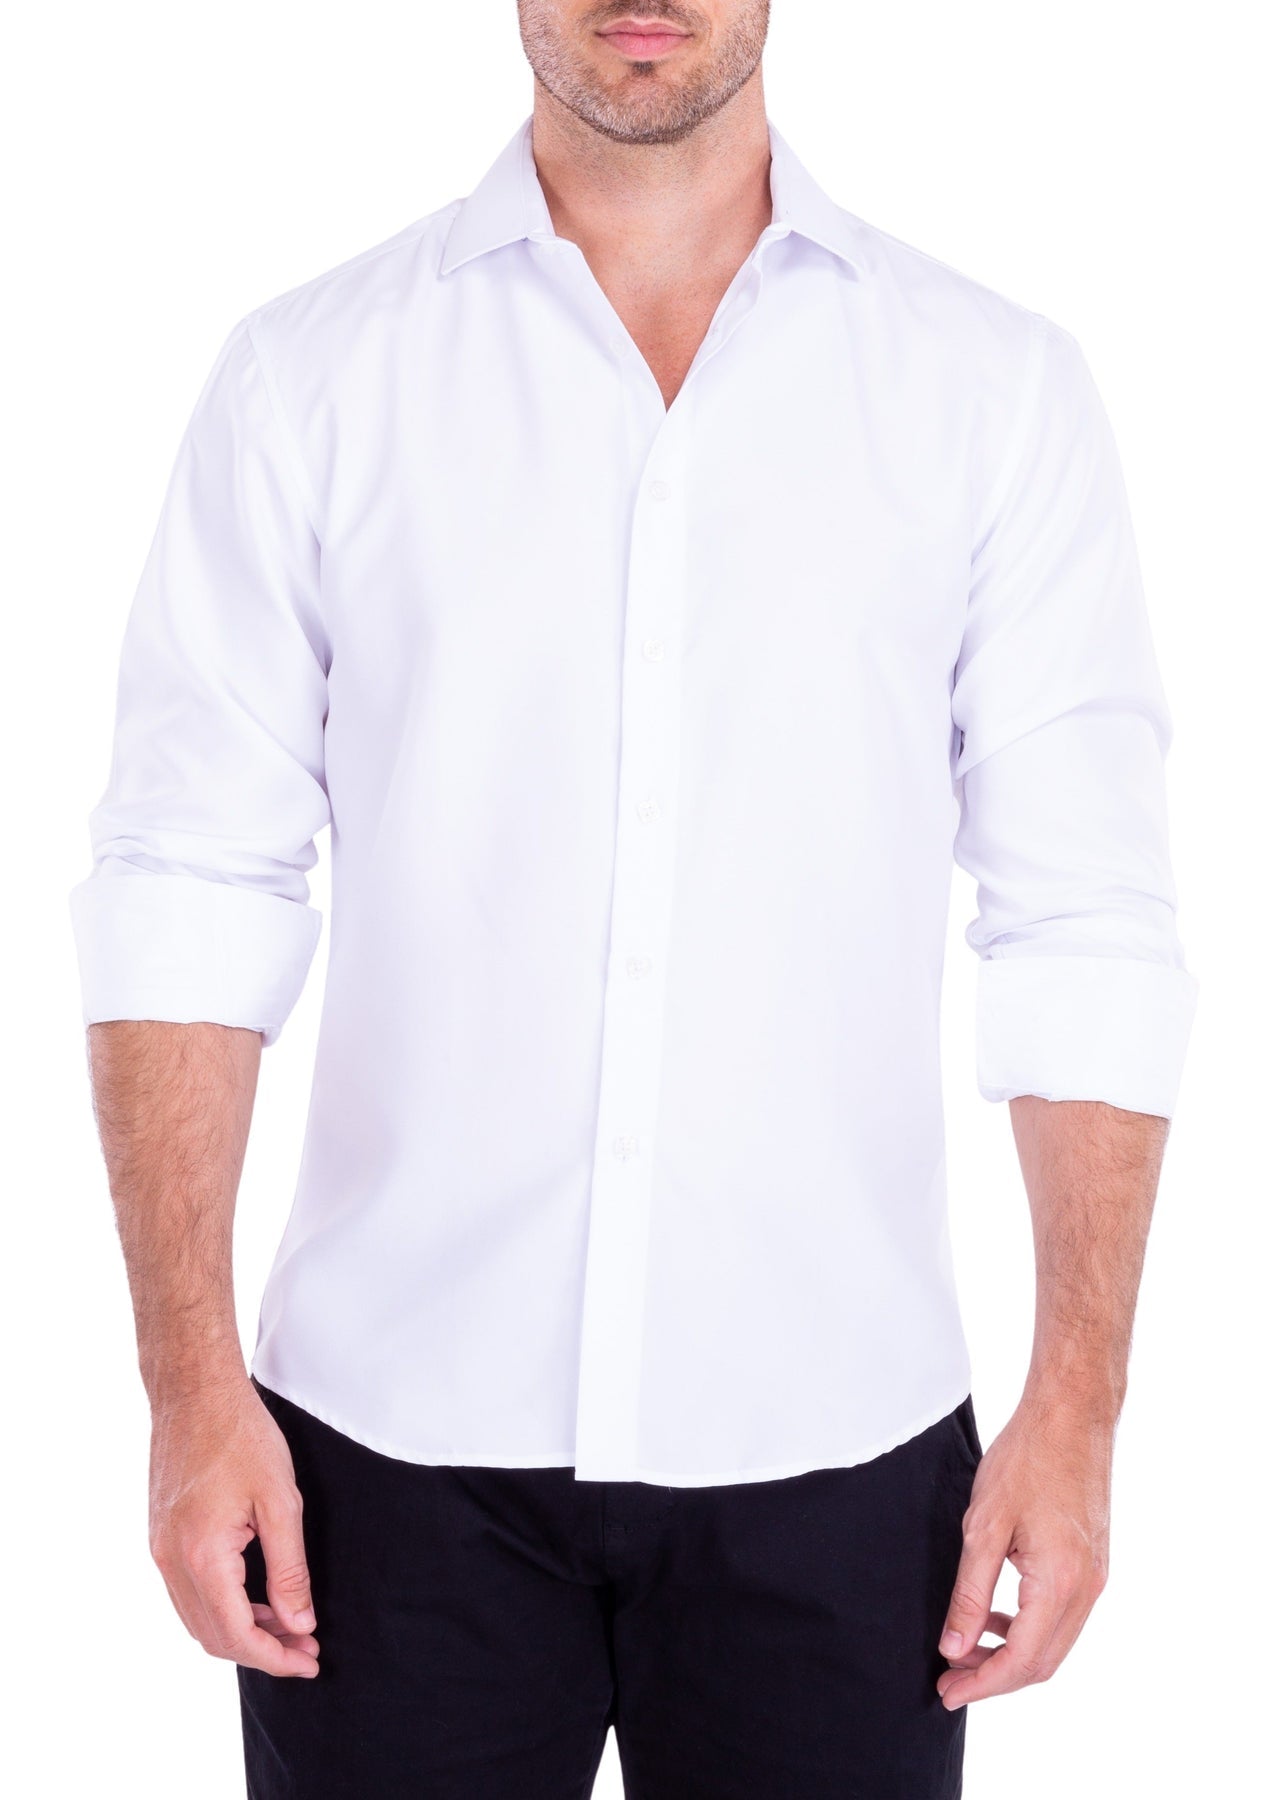 Men's Long Sleeve Shirts - Formal & Casual Tops